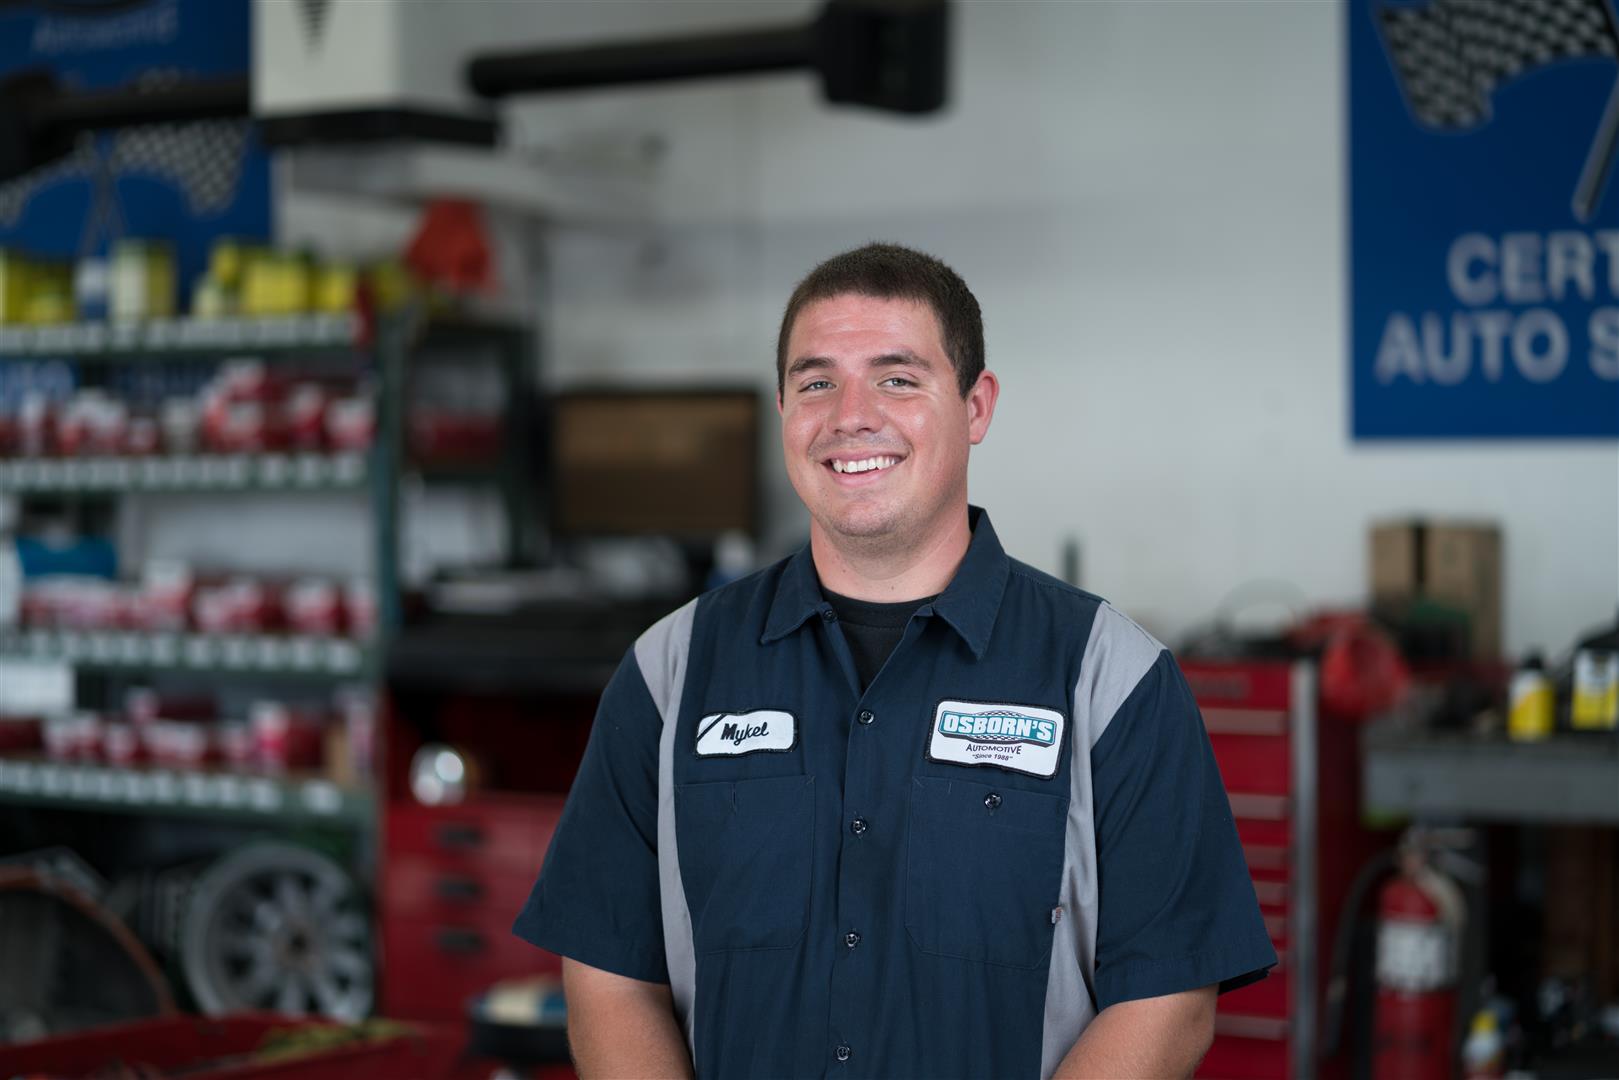 Mykel Sesto- Porter/Junior Service Advisor at Osborn's Automotive Inc.